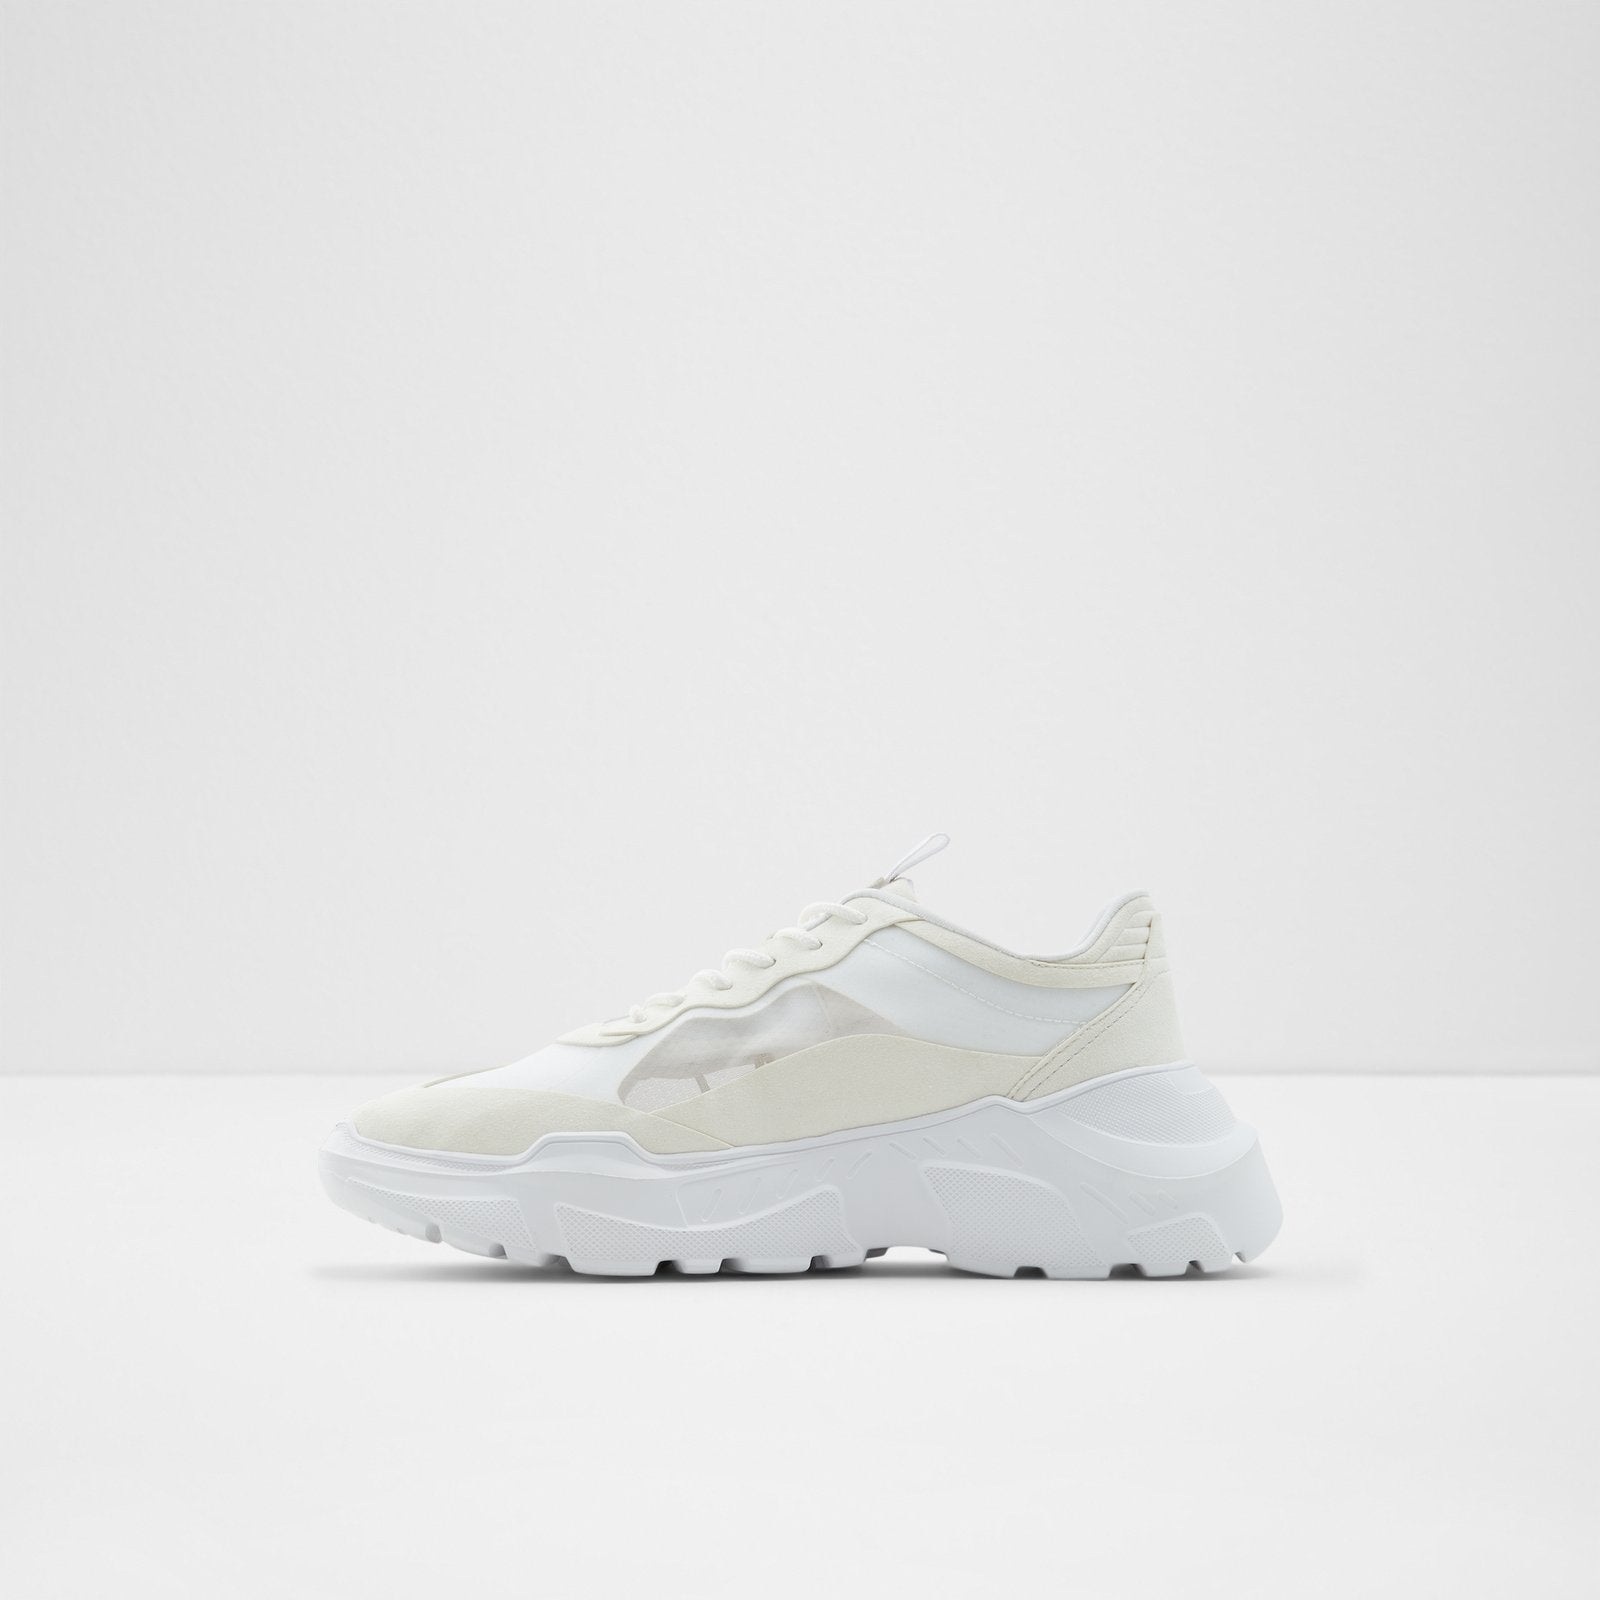 Quicksole Men Shoes - White - ALDO KSA